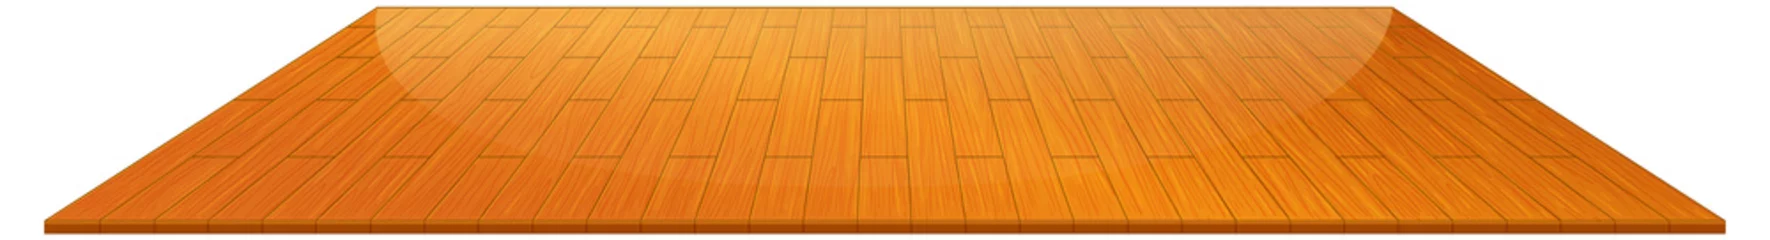 Door stickers Kids Wooden floor tiles isolated on white background